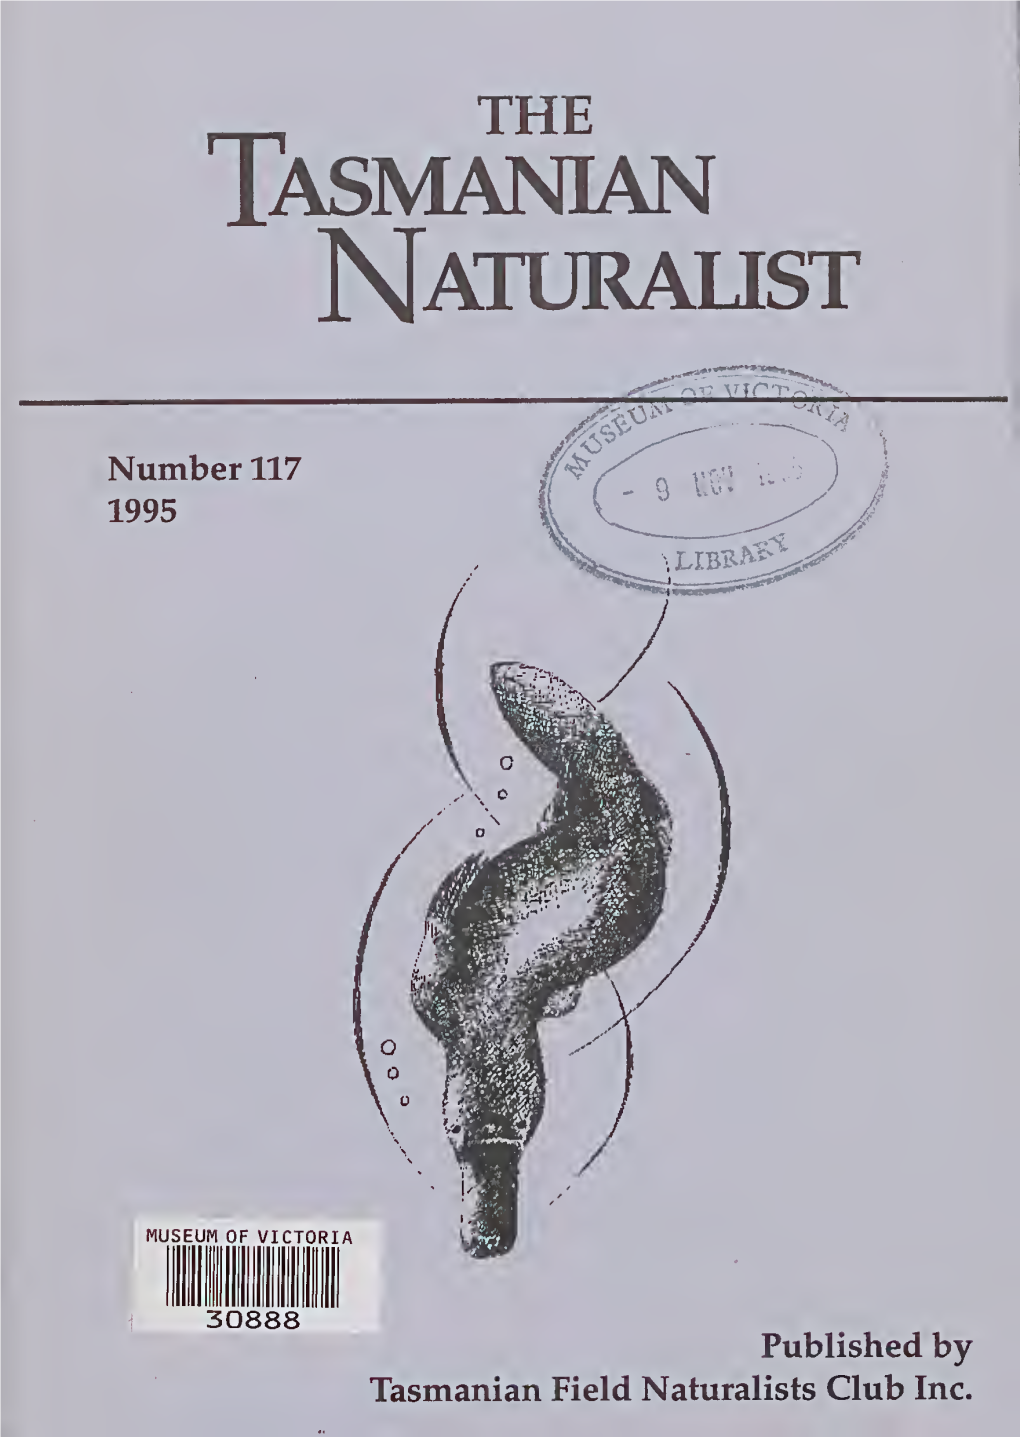 THE Tasmanian Naturalist